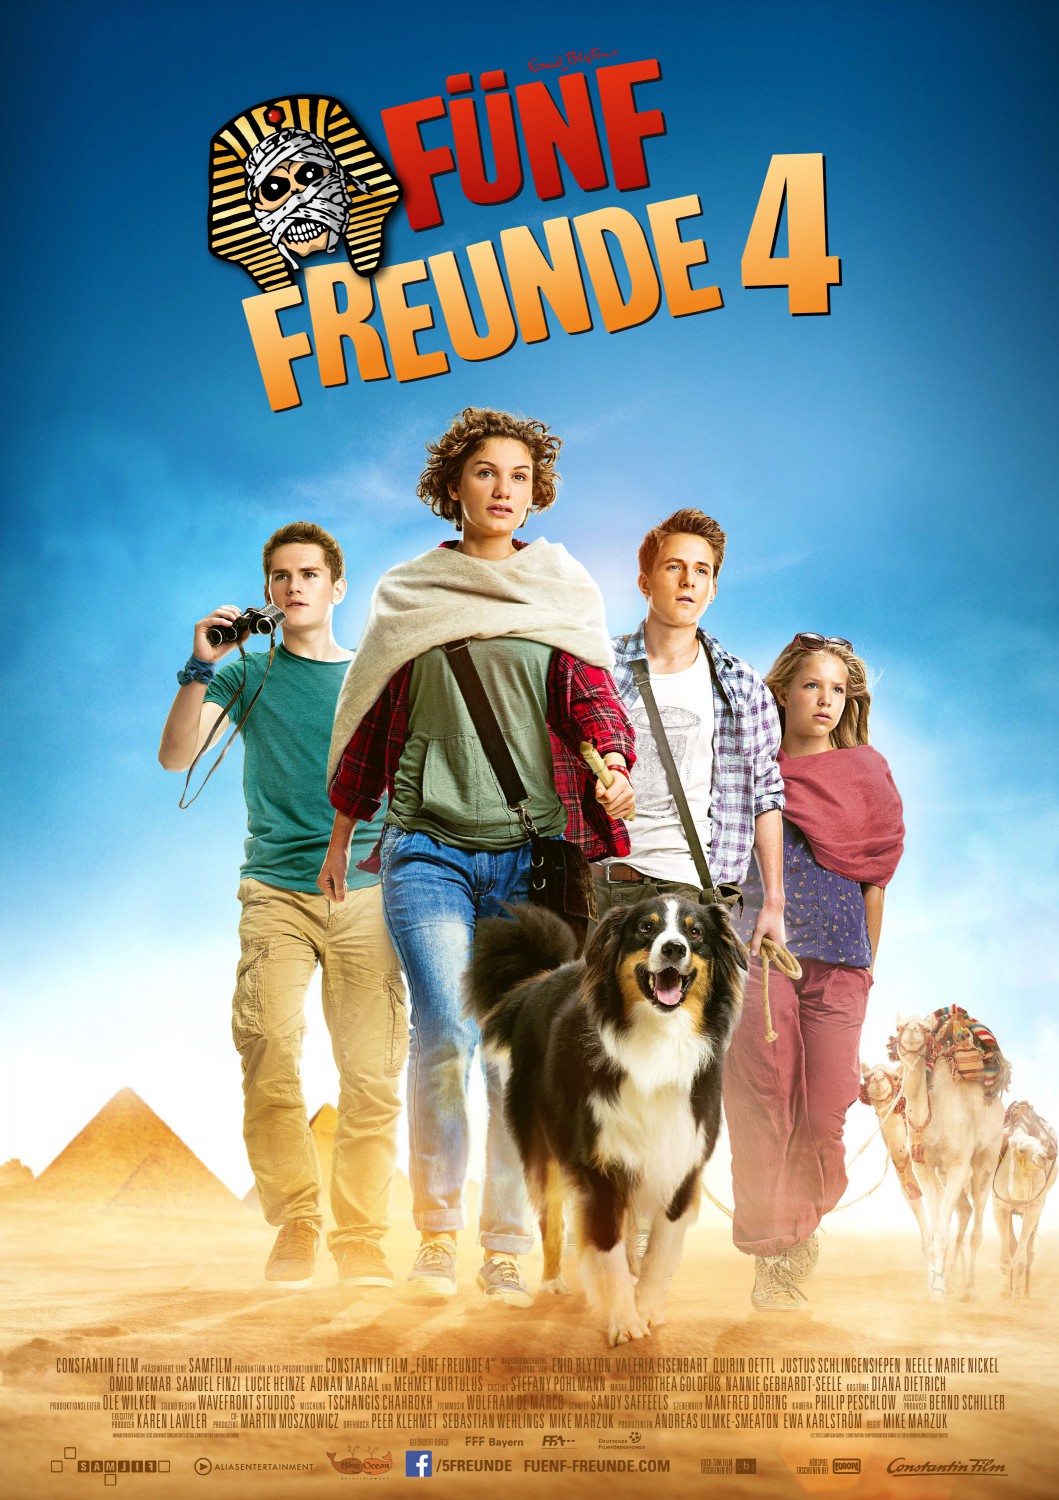 Extra Large Movie Poster Image for Fünf Freunde 4 (#1 of 3)